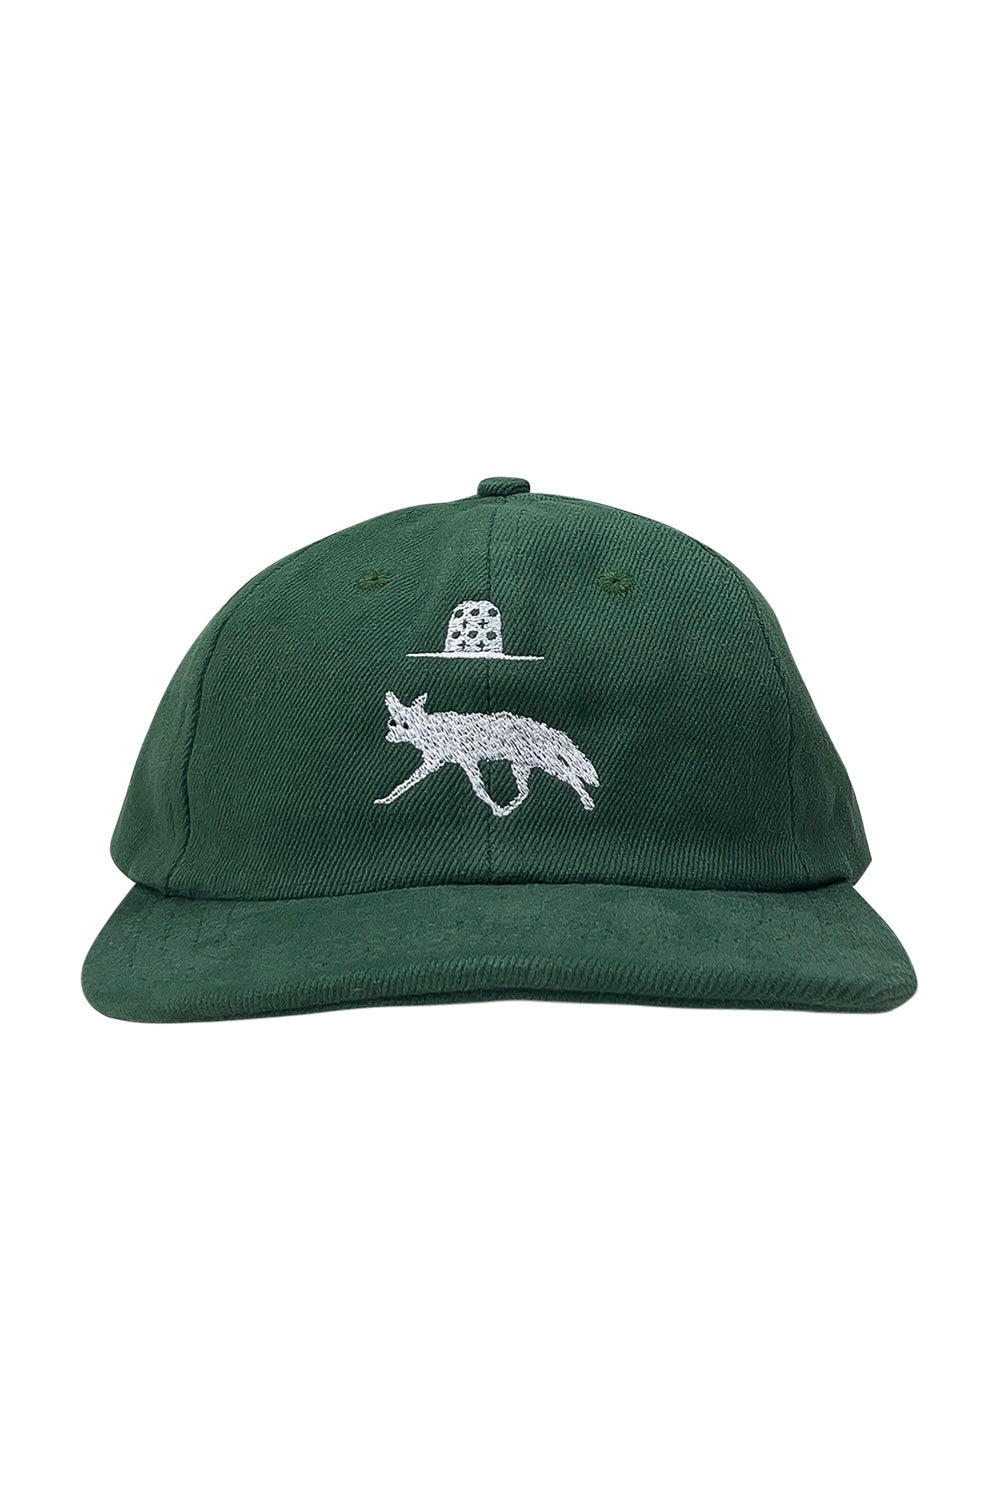 Coyote Twill Cap | Jungmaven Hemp Clothing & Accessories / Color: Hunter Green